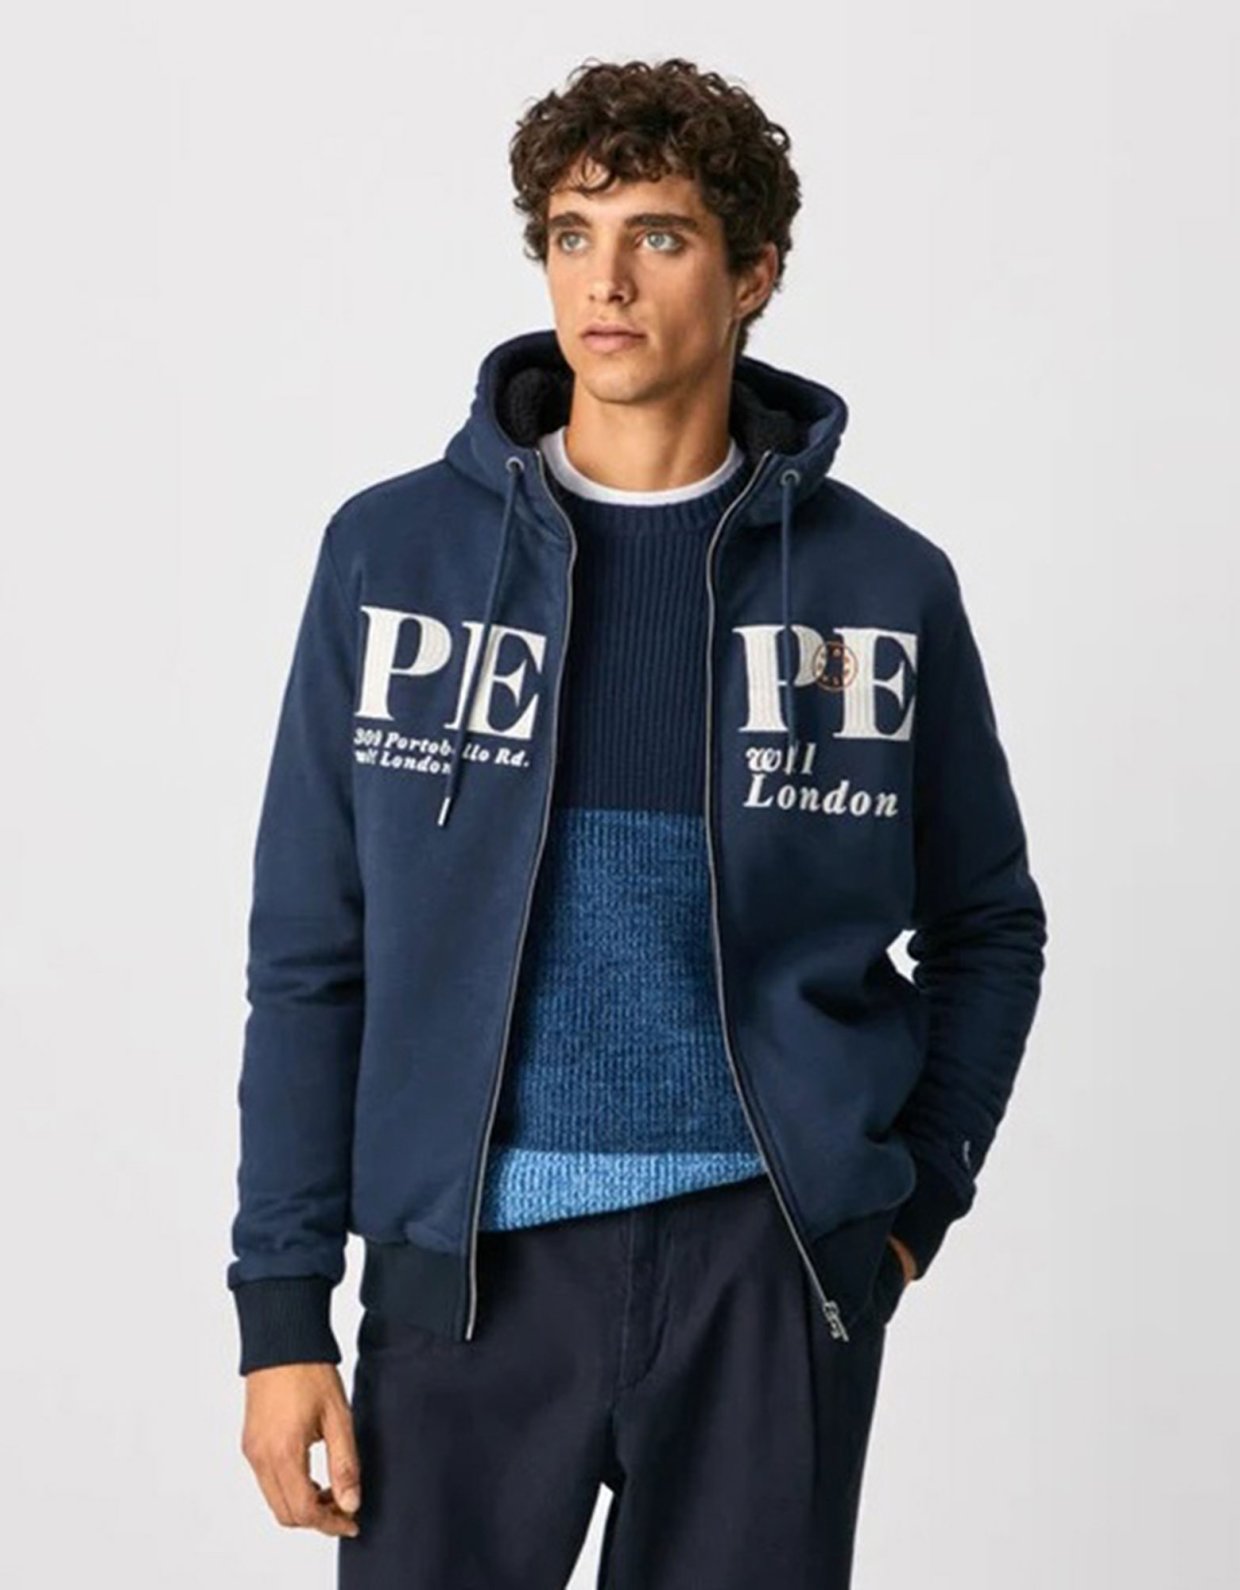 Pepe Jeans Ludwing zip up sweatshirt dulwich